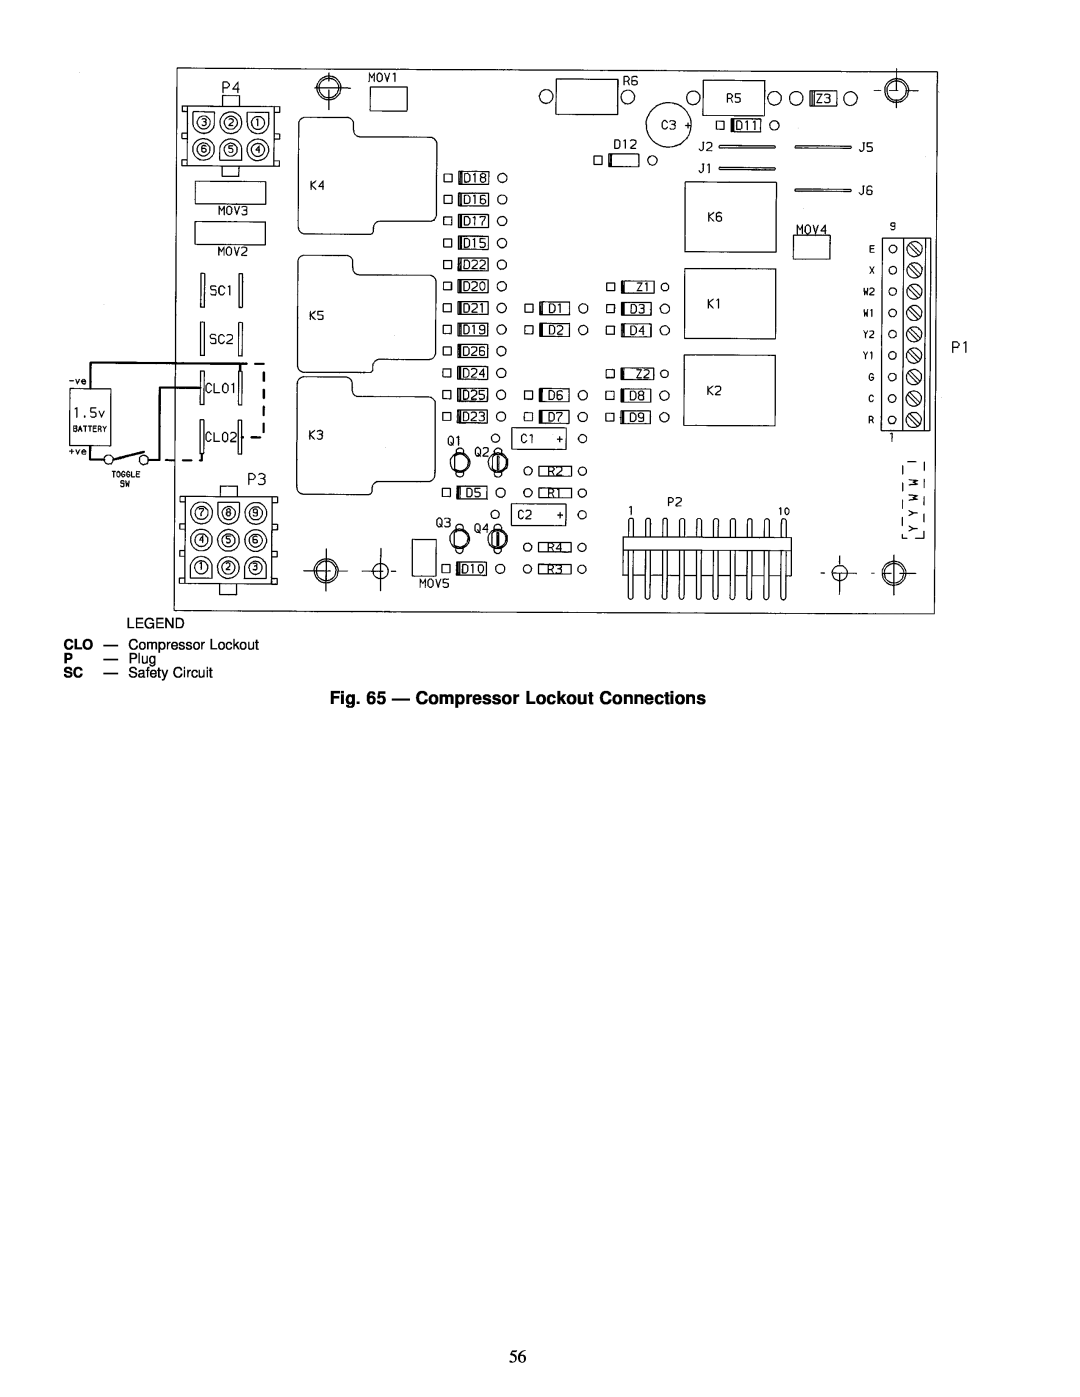 Carrier NP034-074 Ð Compressor Lockout Connections, LEGEND CLO Ð Compressor Lockout PÐ Plug, SC Ð Safety Circuit 